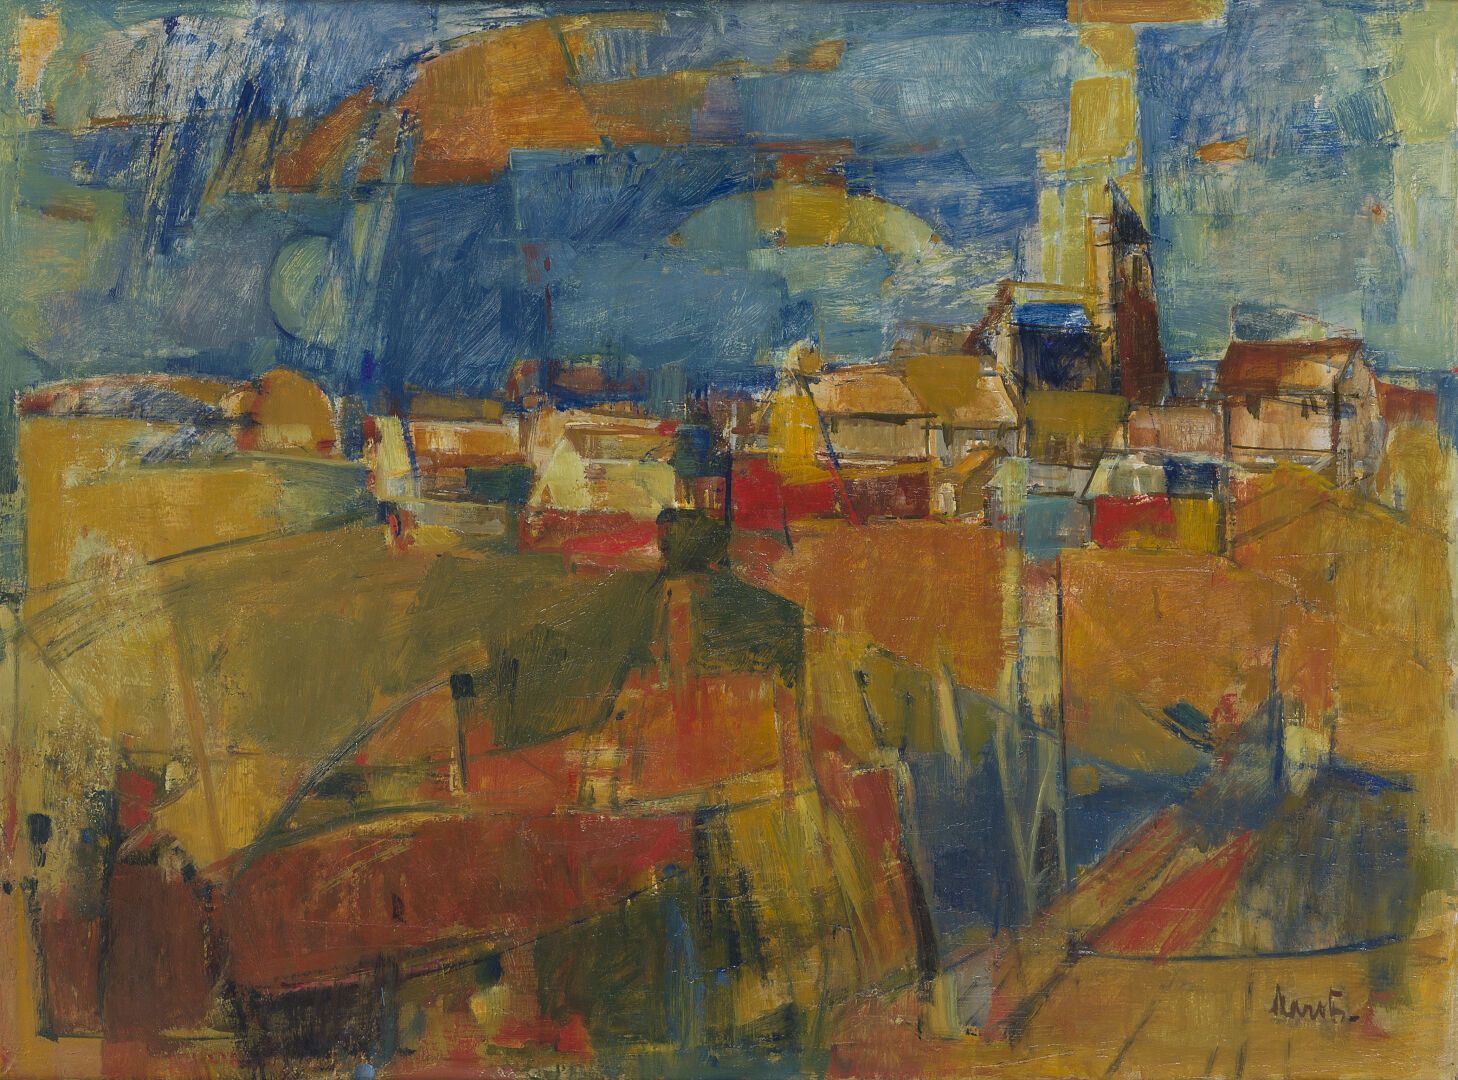 Null 罗杰-巴罗特（1926-2016）
卡巴纳斯
布面油画
右下方有签名
73 x 100 cm